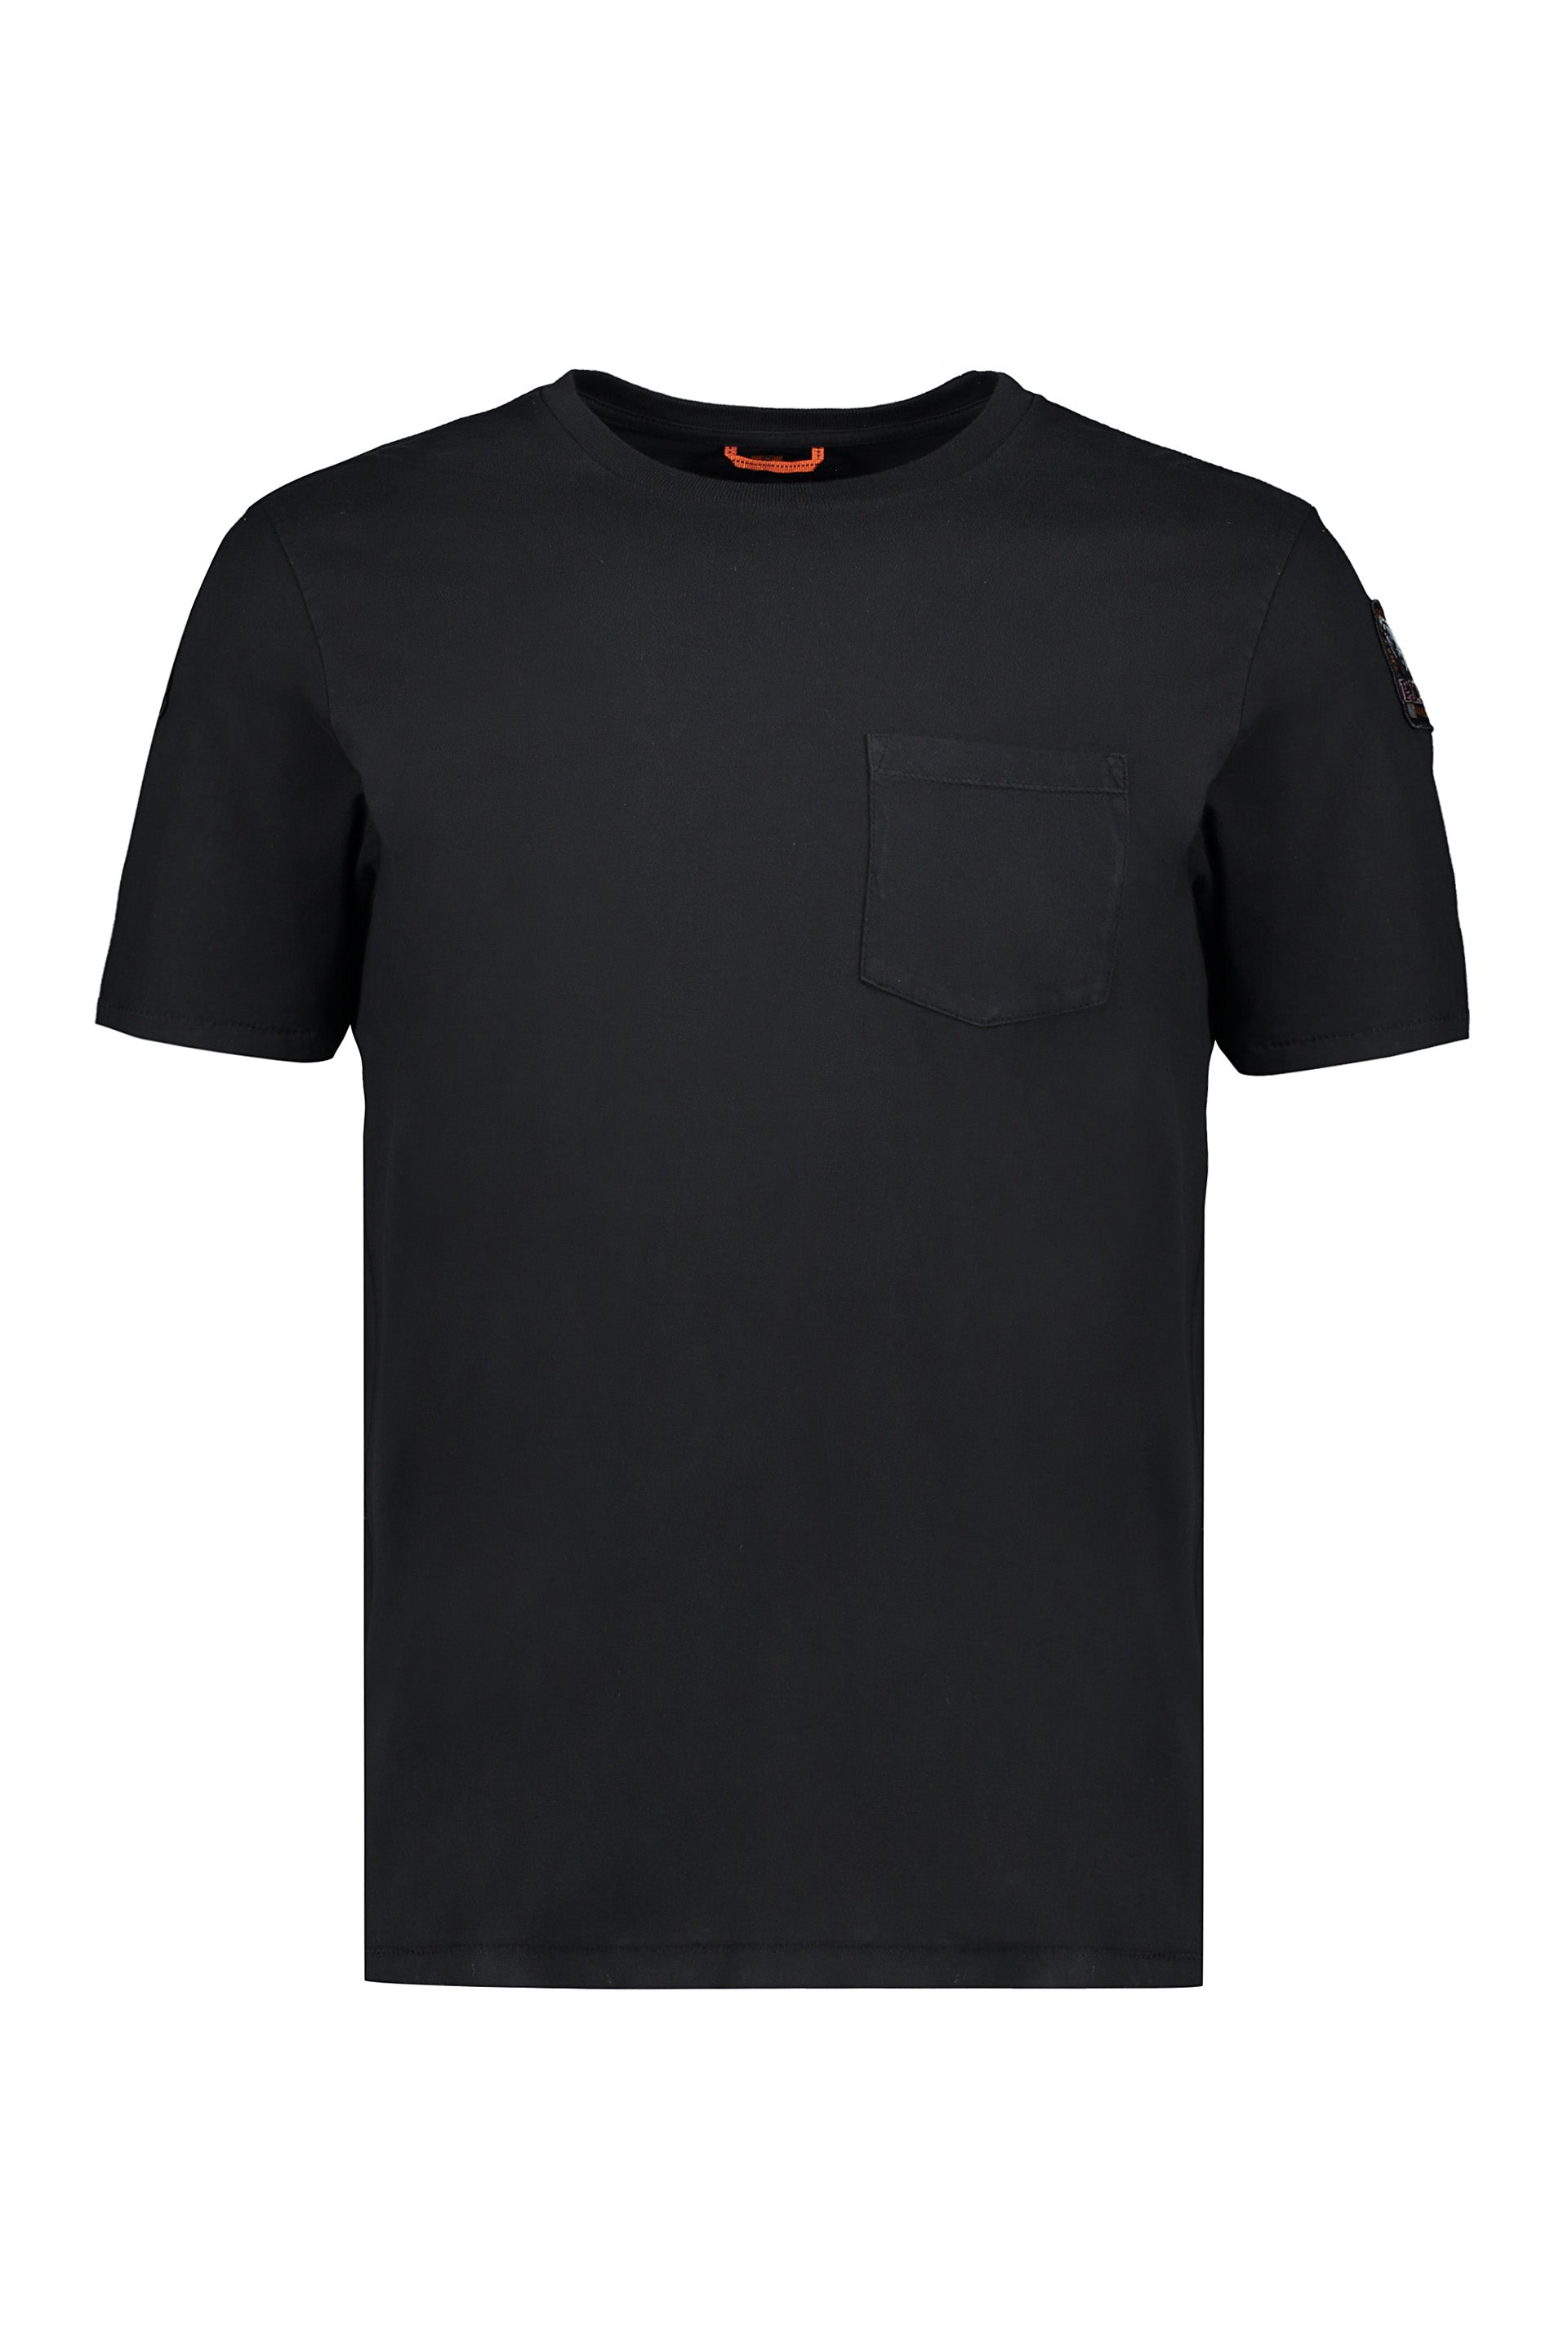 Parajumpers-OUTLET-SALE-Cotton-T-shirt-Shirts-S-ARCHIVE-COLLECTION.jpg